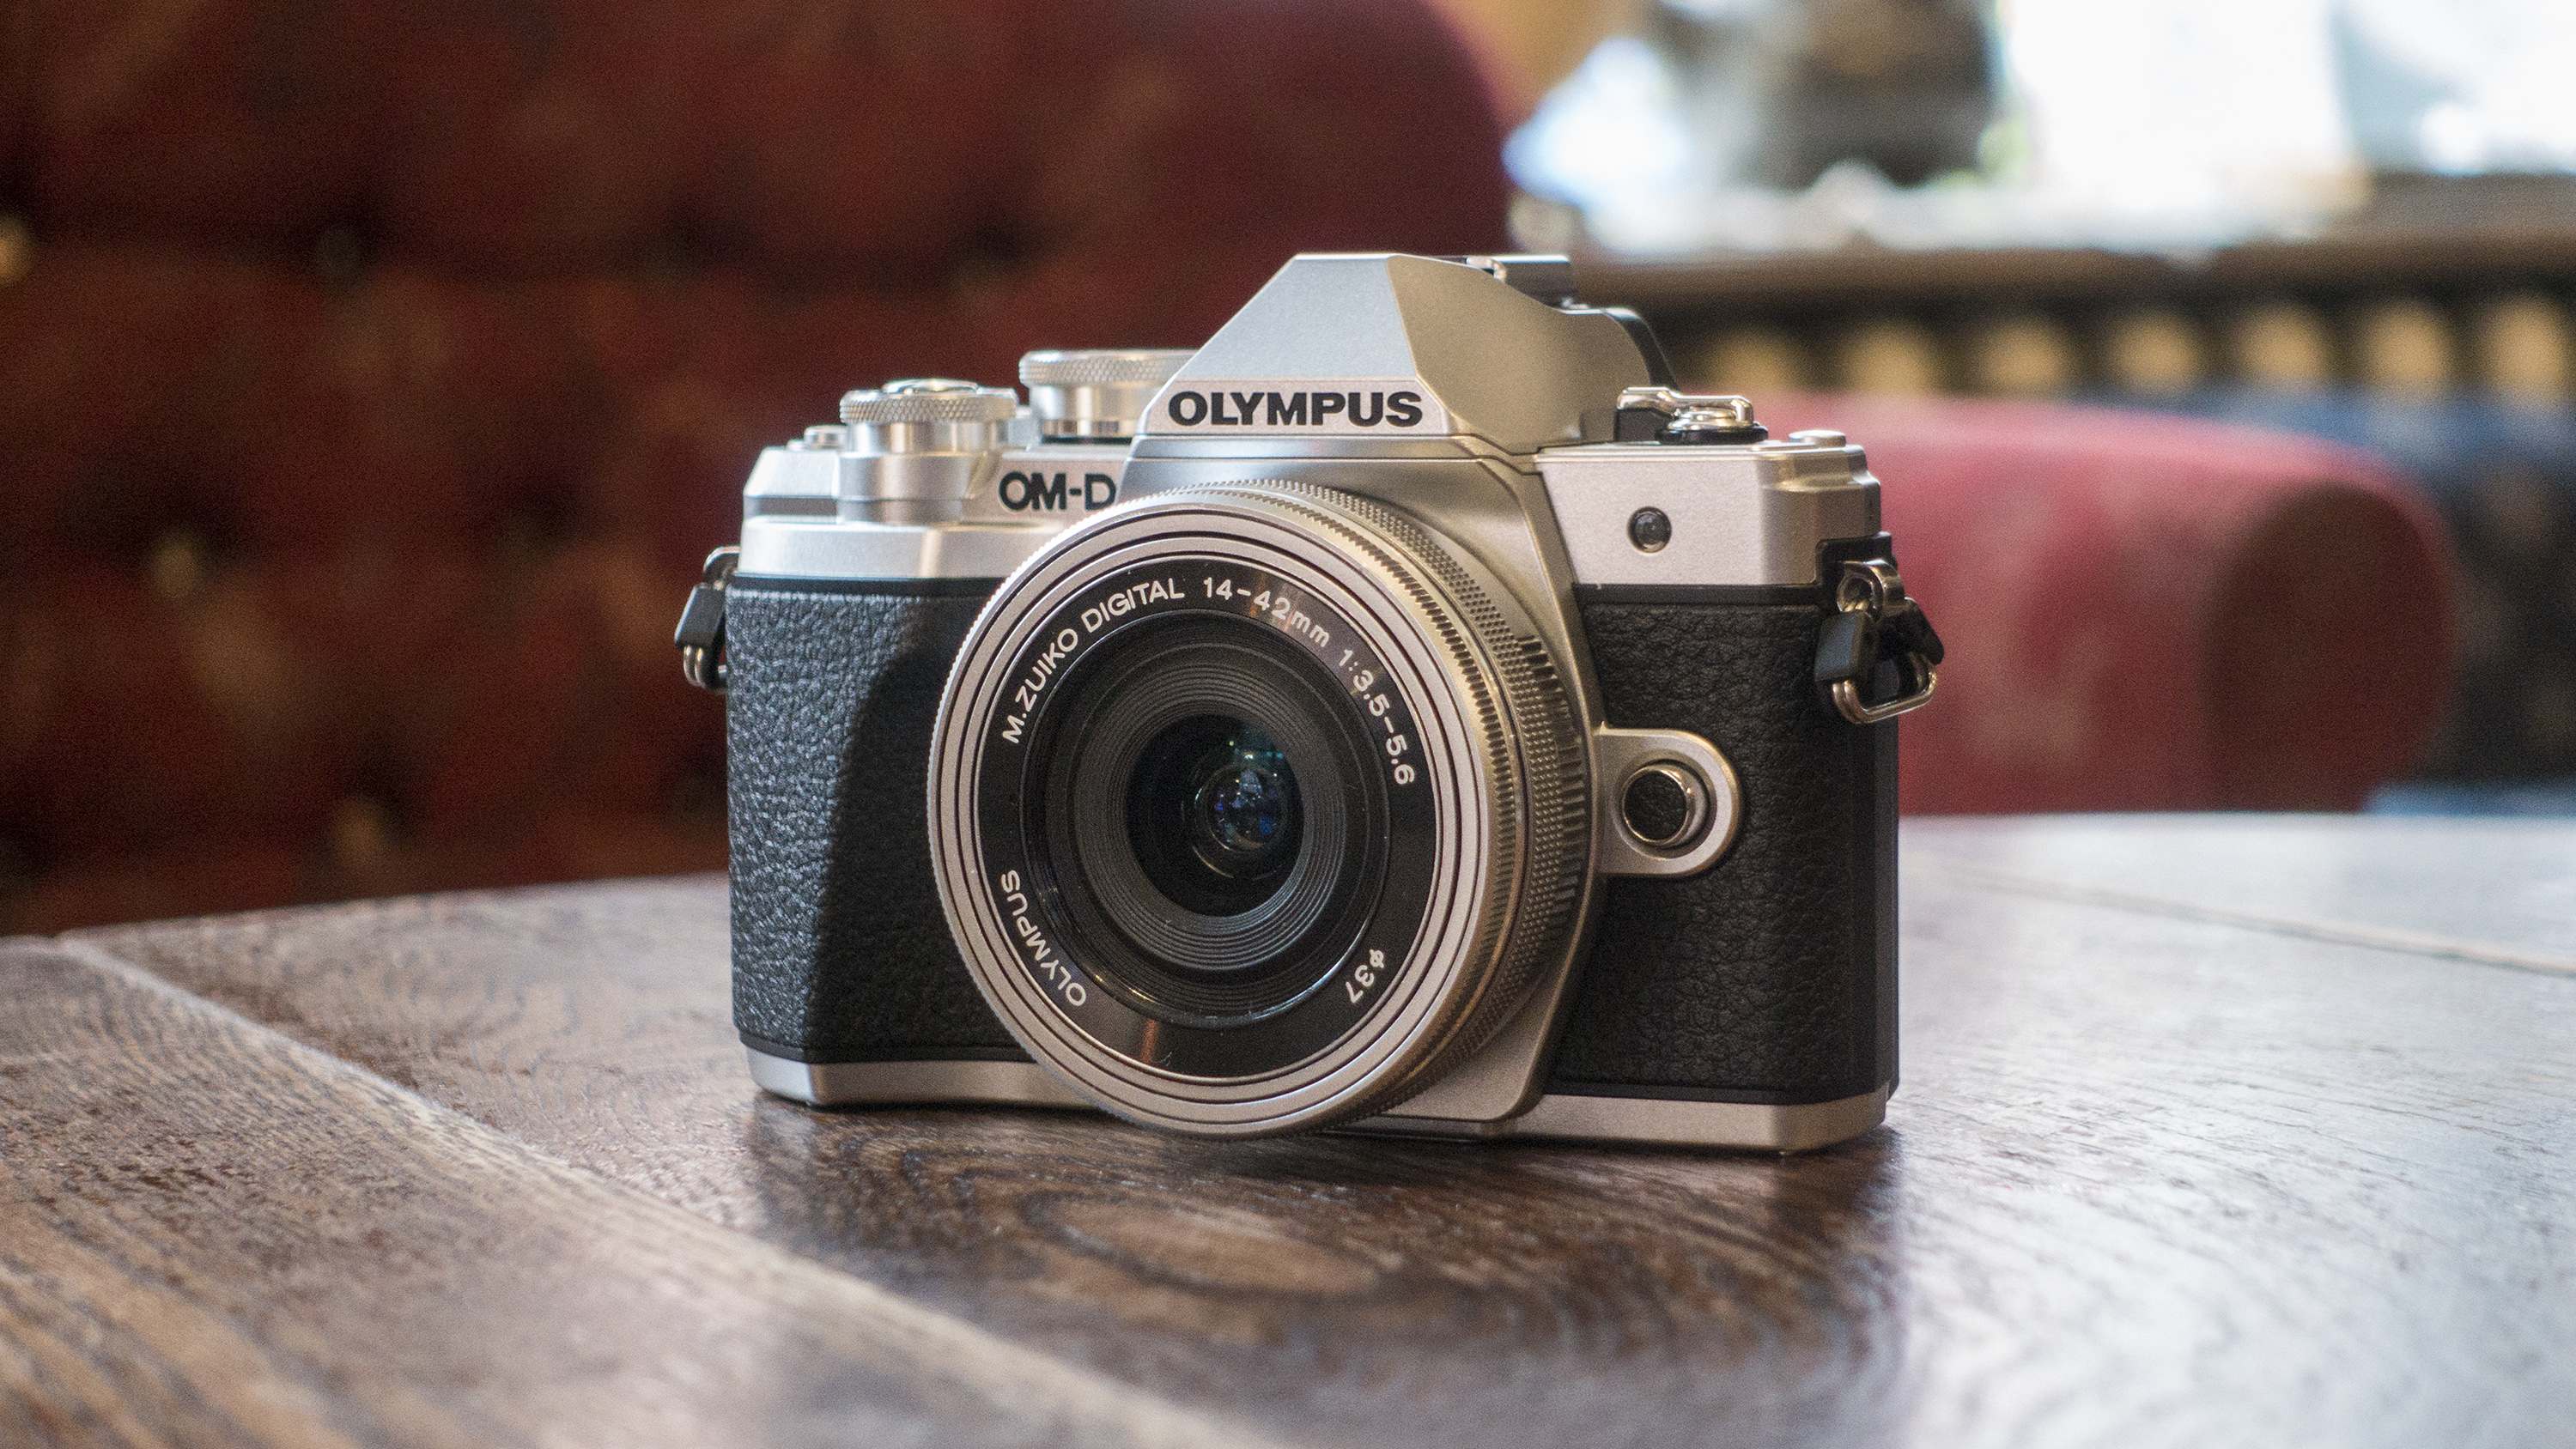 Best camera: Olympus OM-D E-M10 Mark III